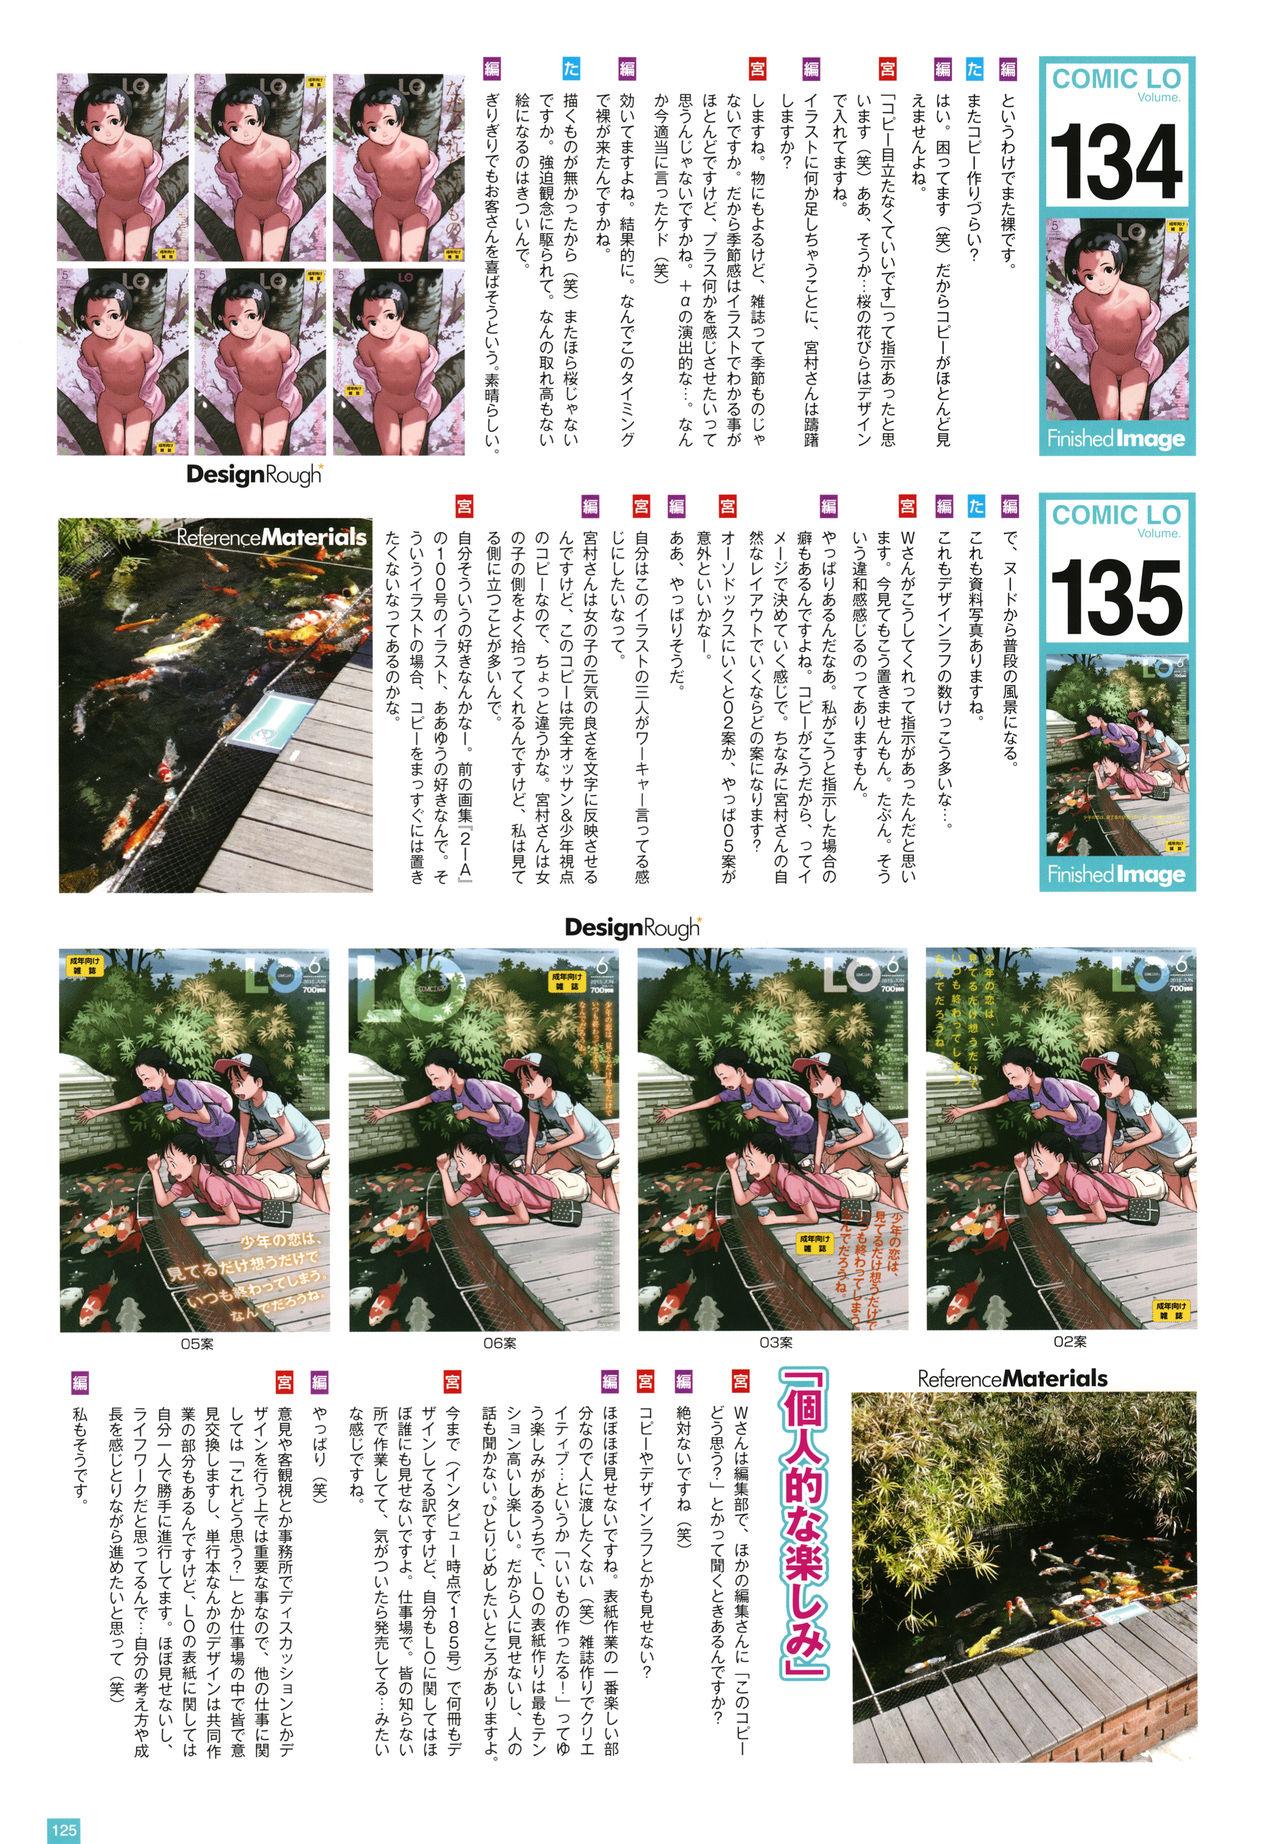 [Takamichi] LO Artbook 2-B TAKAMICHI LO-fi WORKS 127